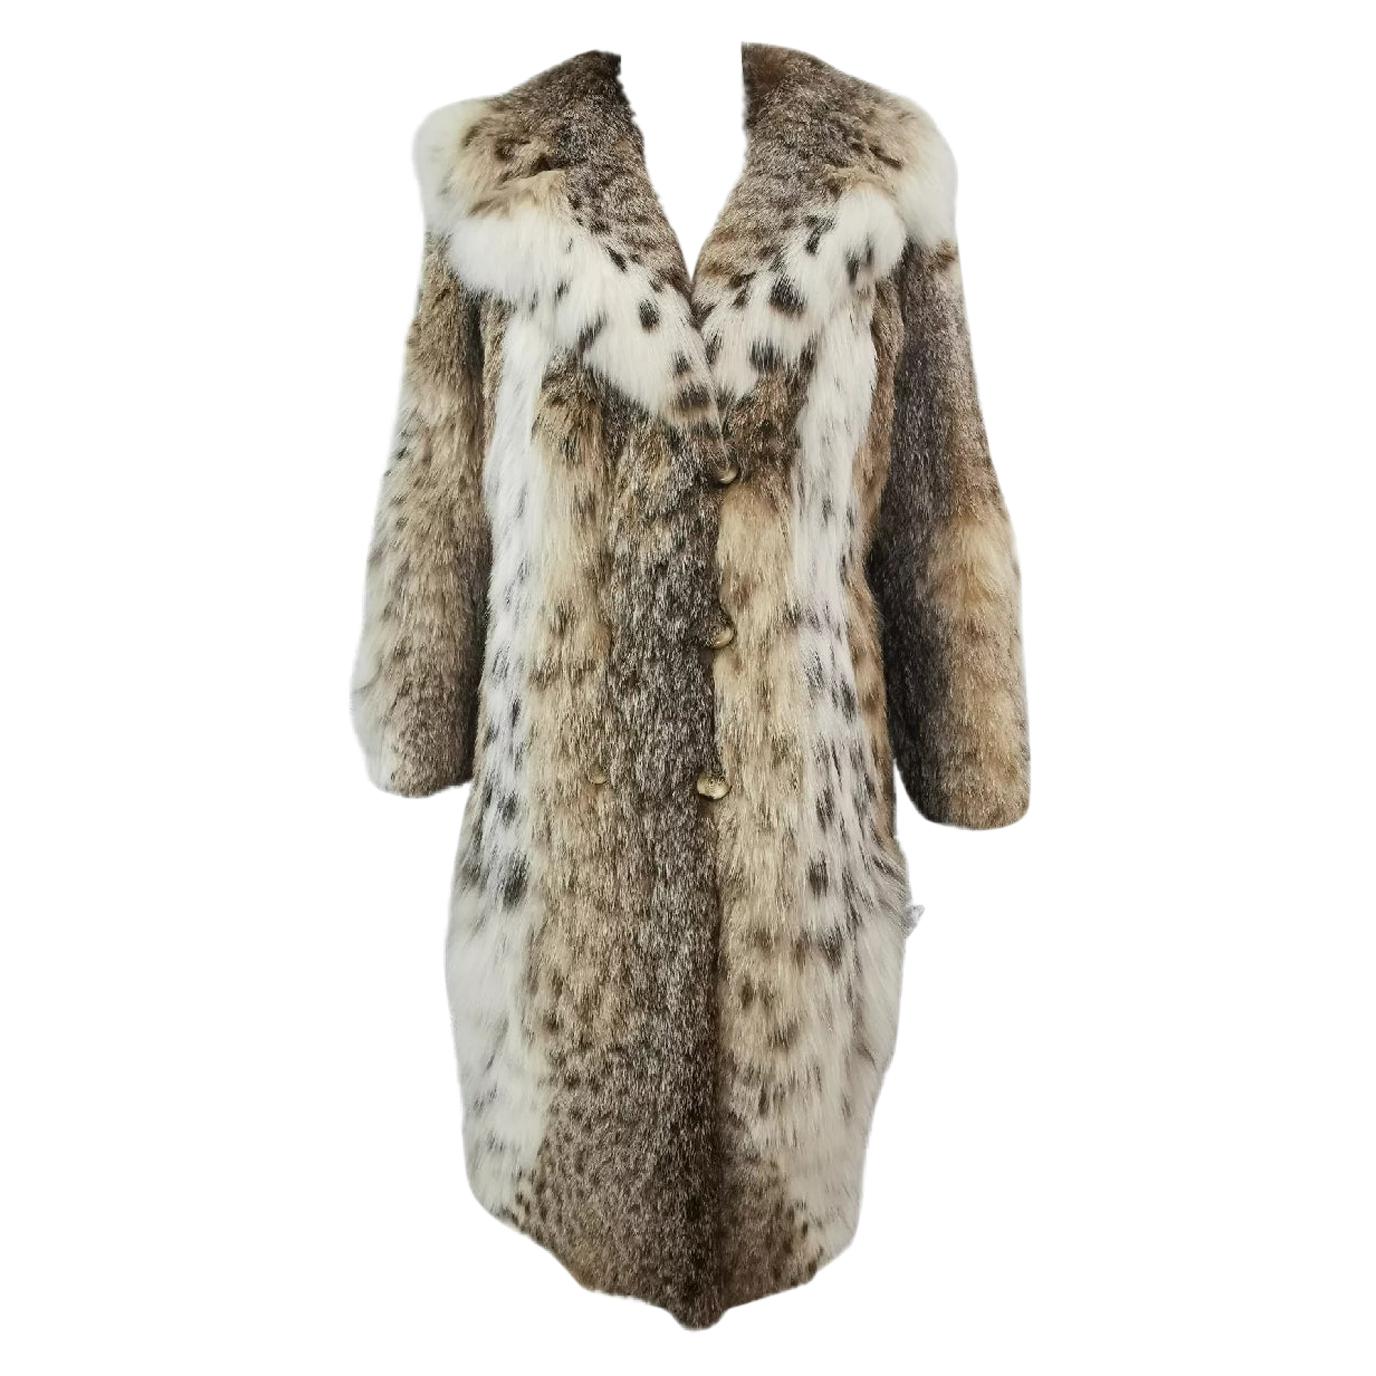 Brand new Bobcat lynx fur coat size 4-6